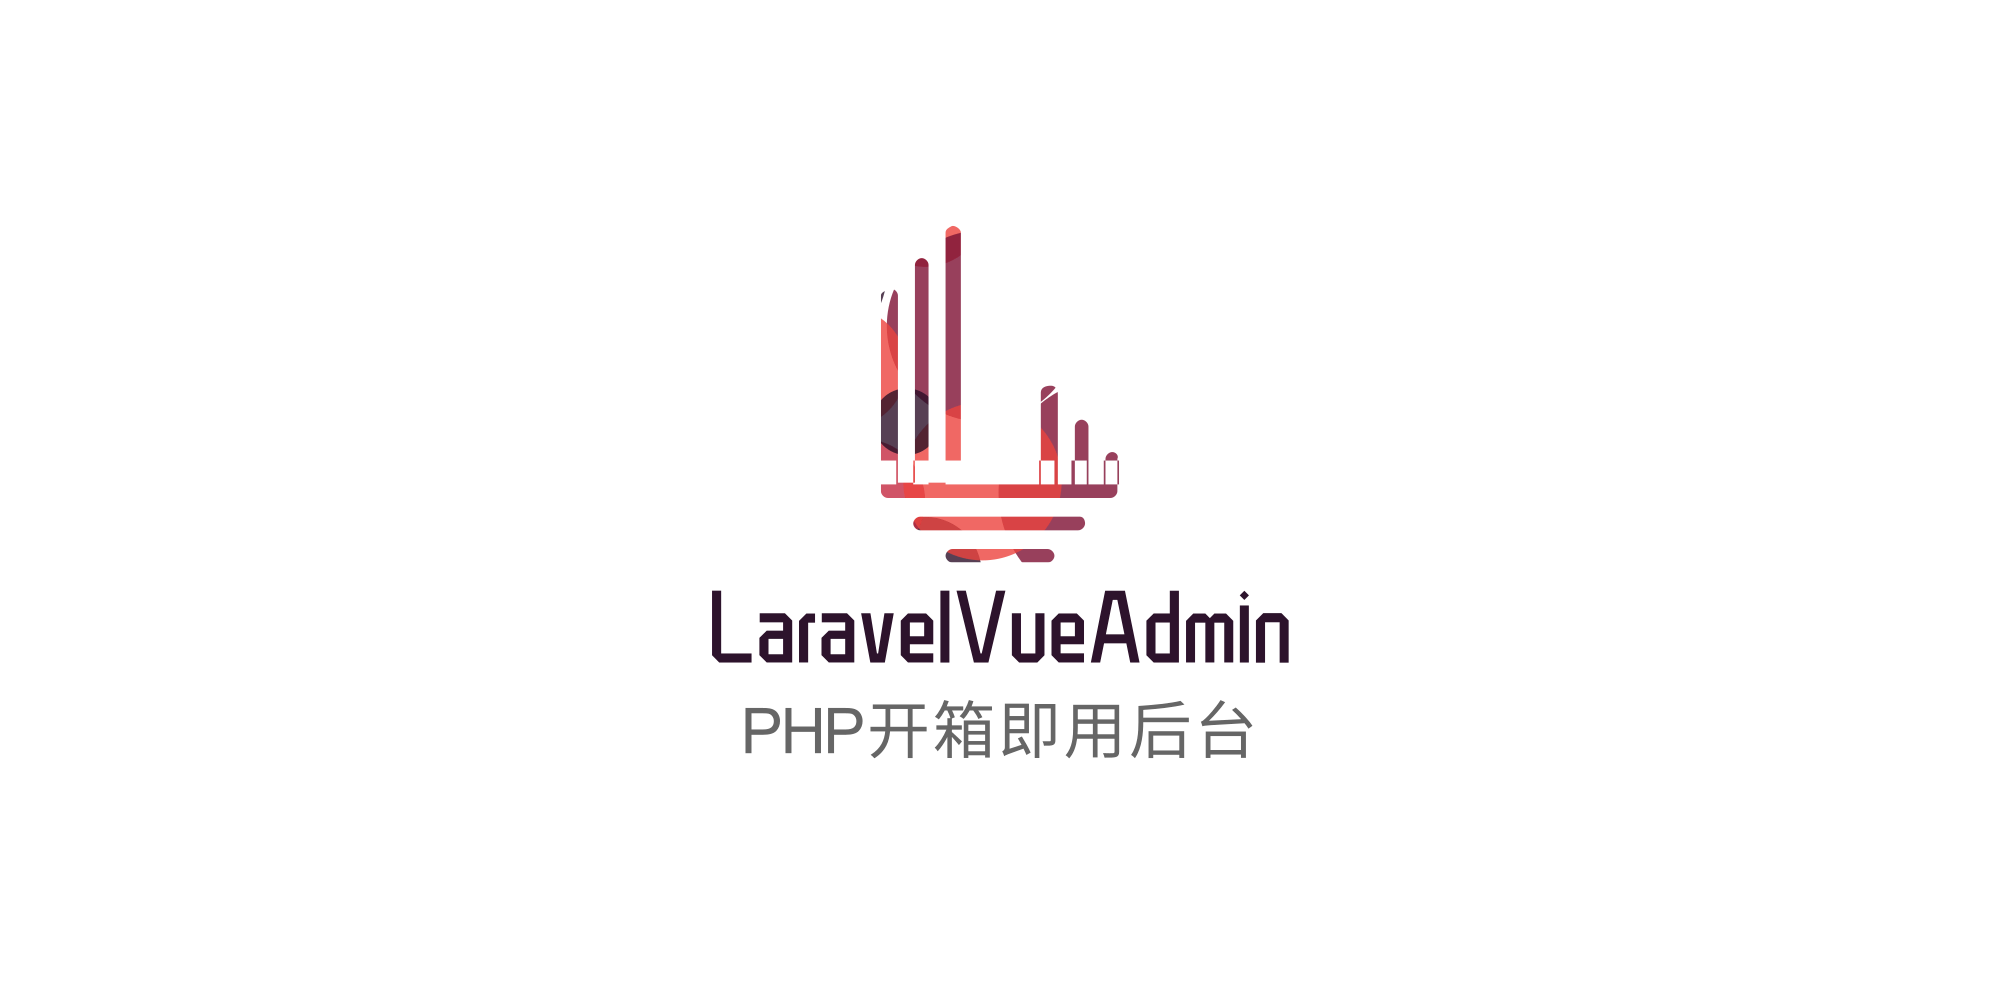 Laravel-Vue-Admin 1.0 版本发布，前后端分离的后台系统